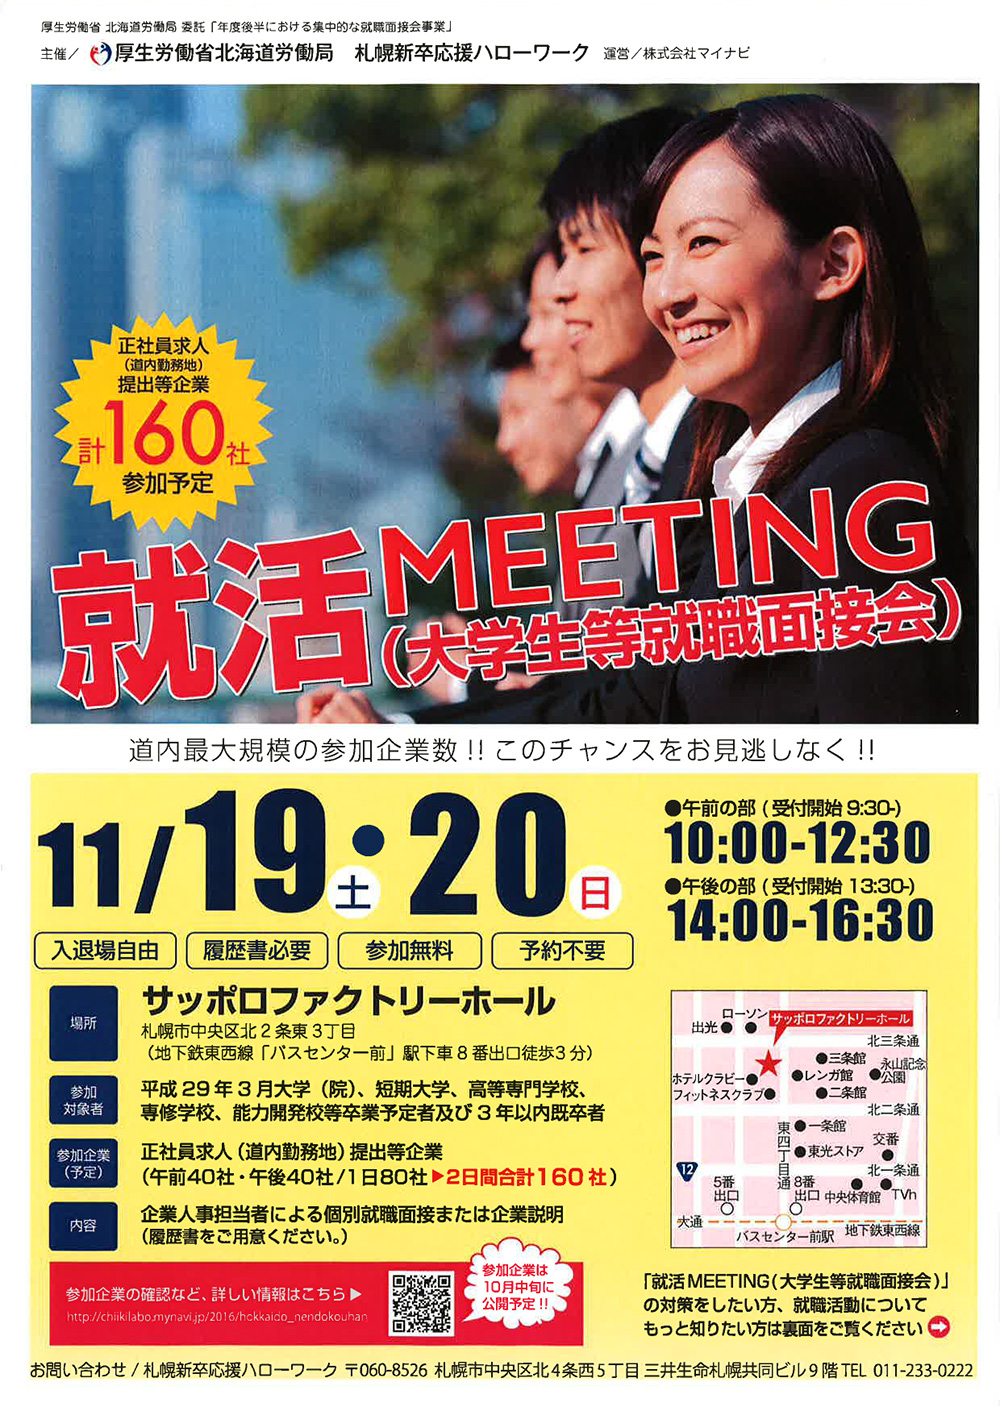 http://www.netsugen.co.jp/setsubi/information/images/1611shukatsu-meeting.jpg